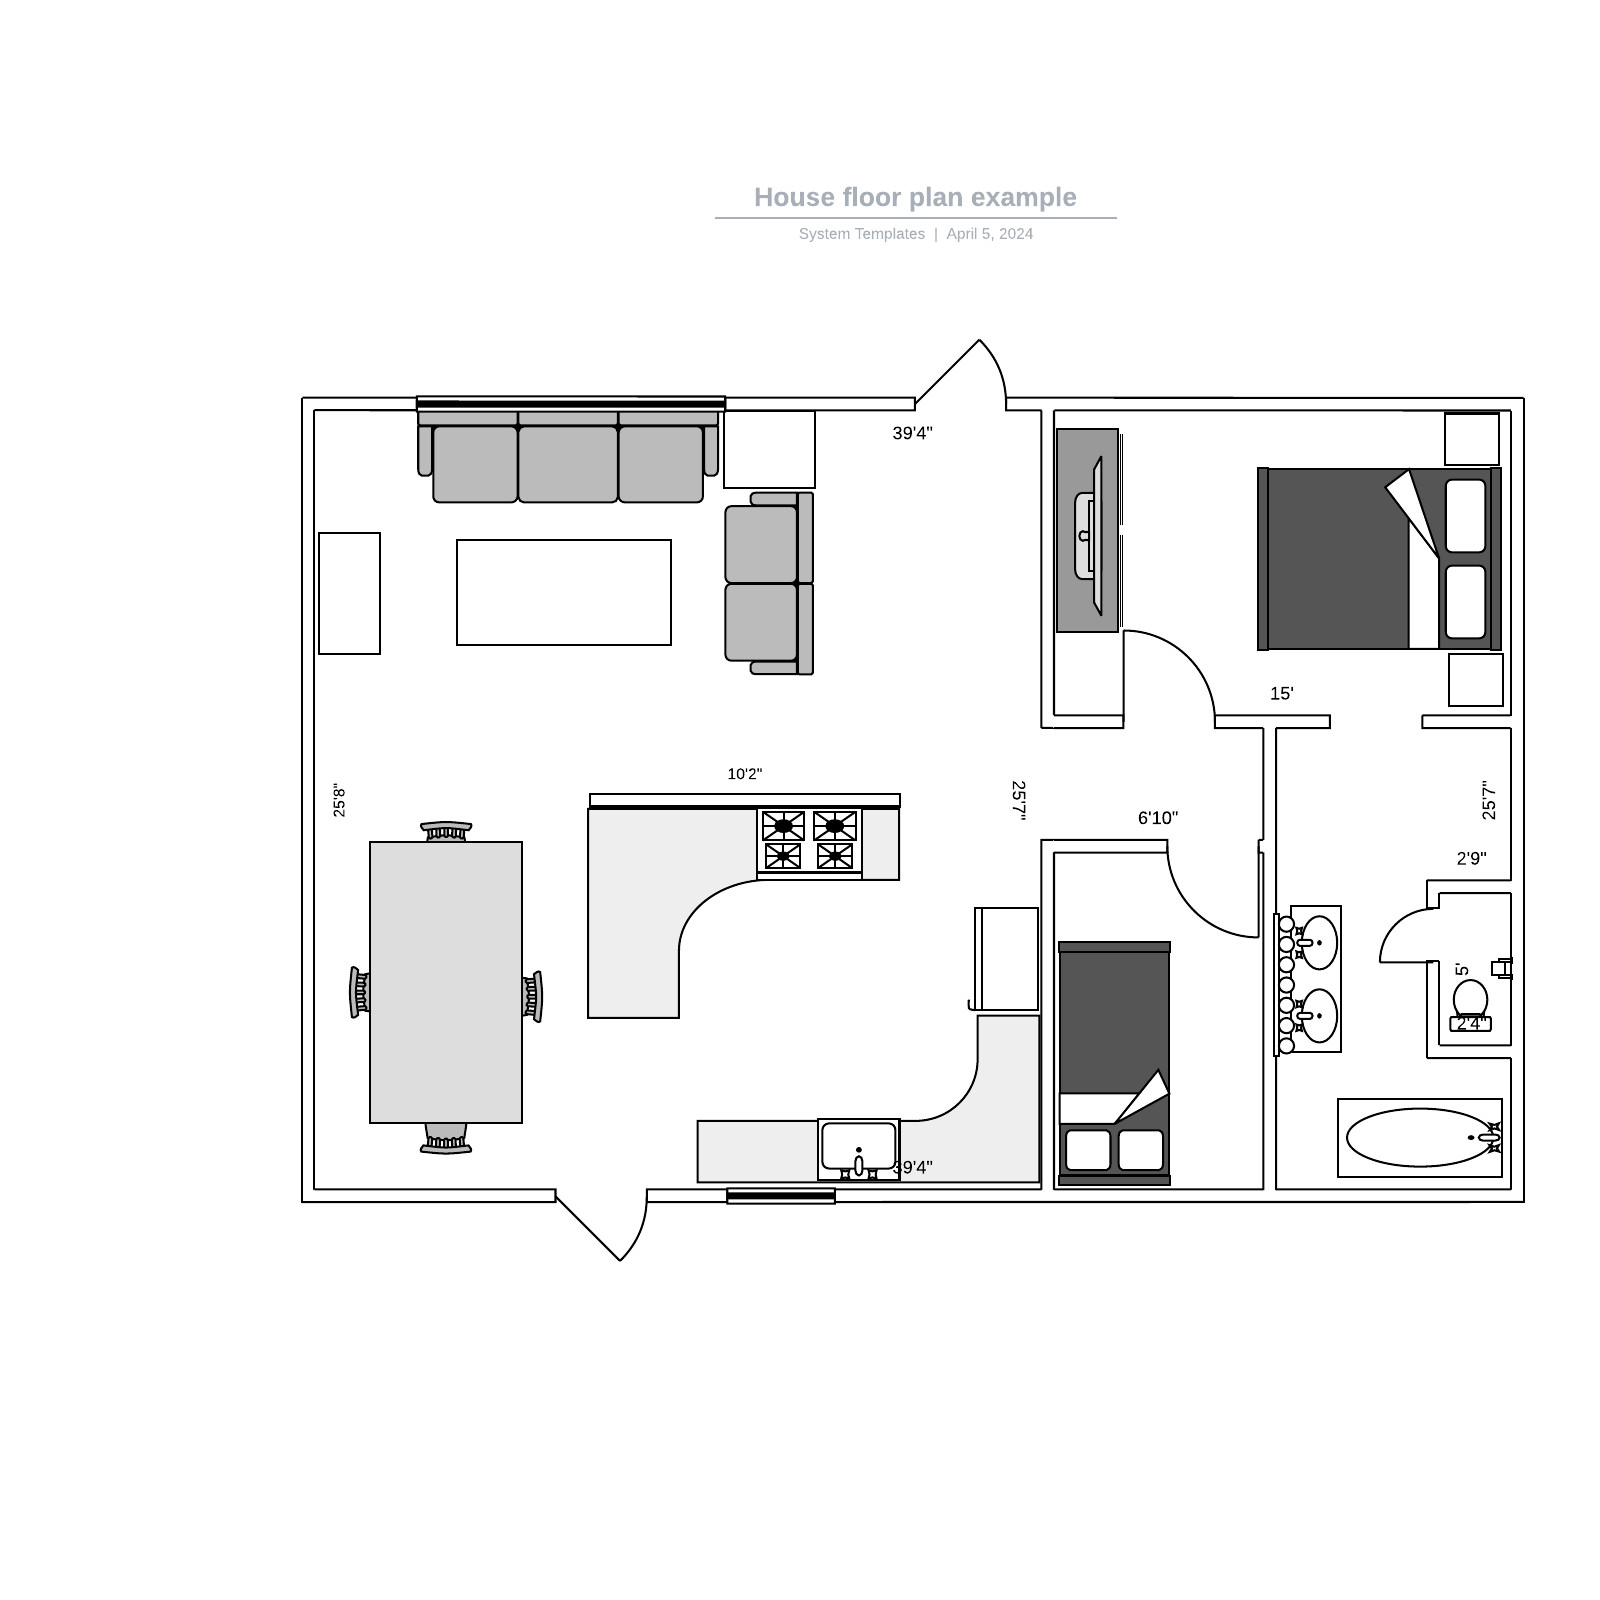 House floor plan example example